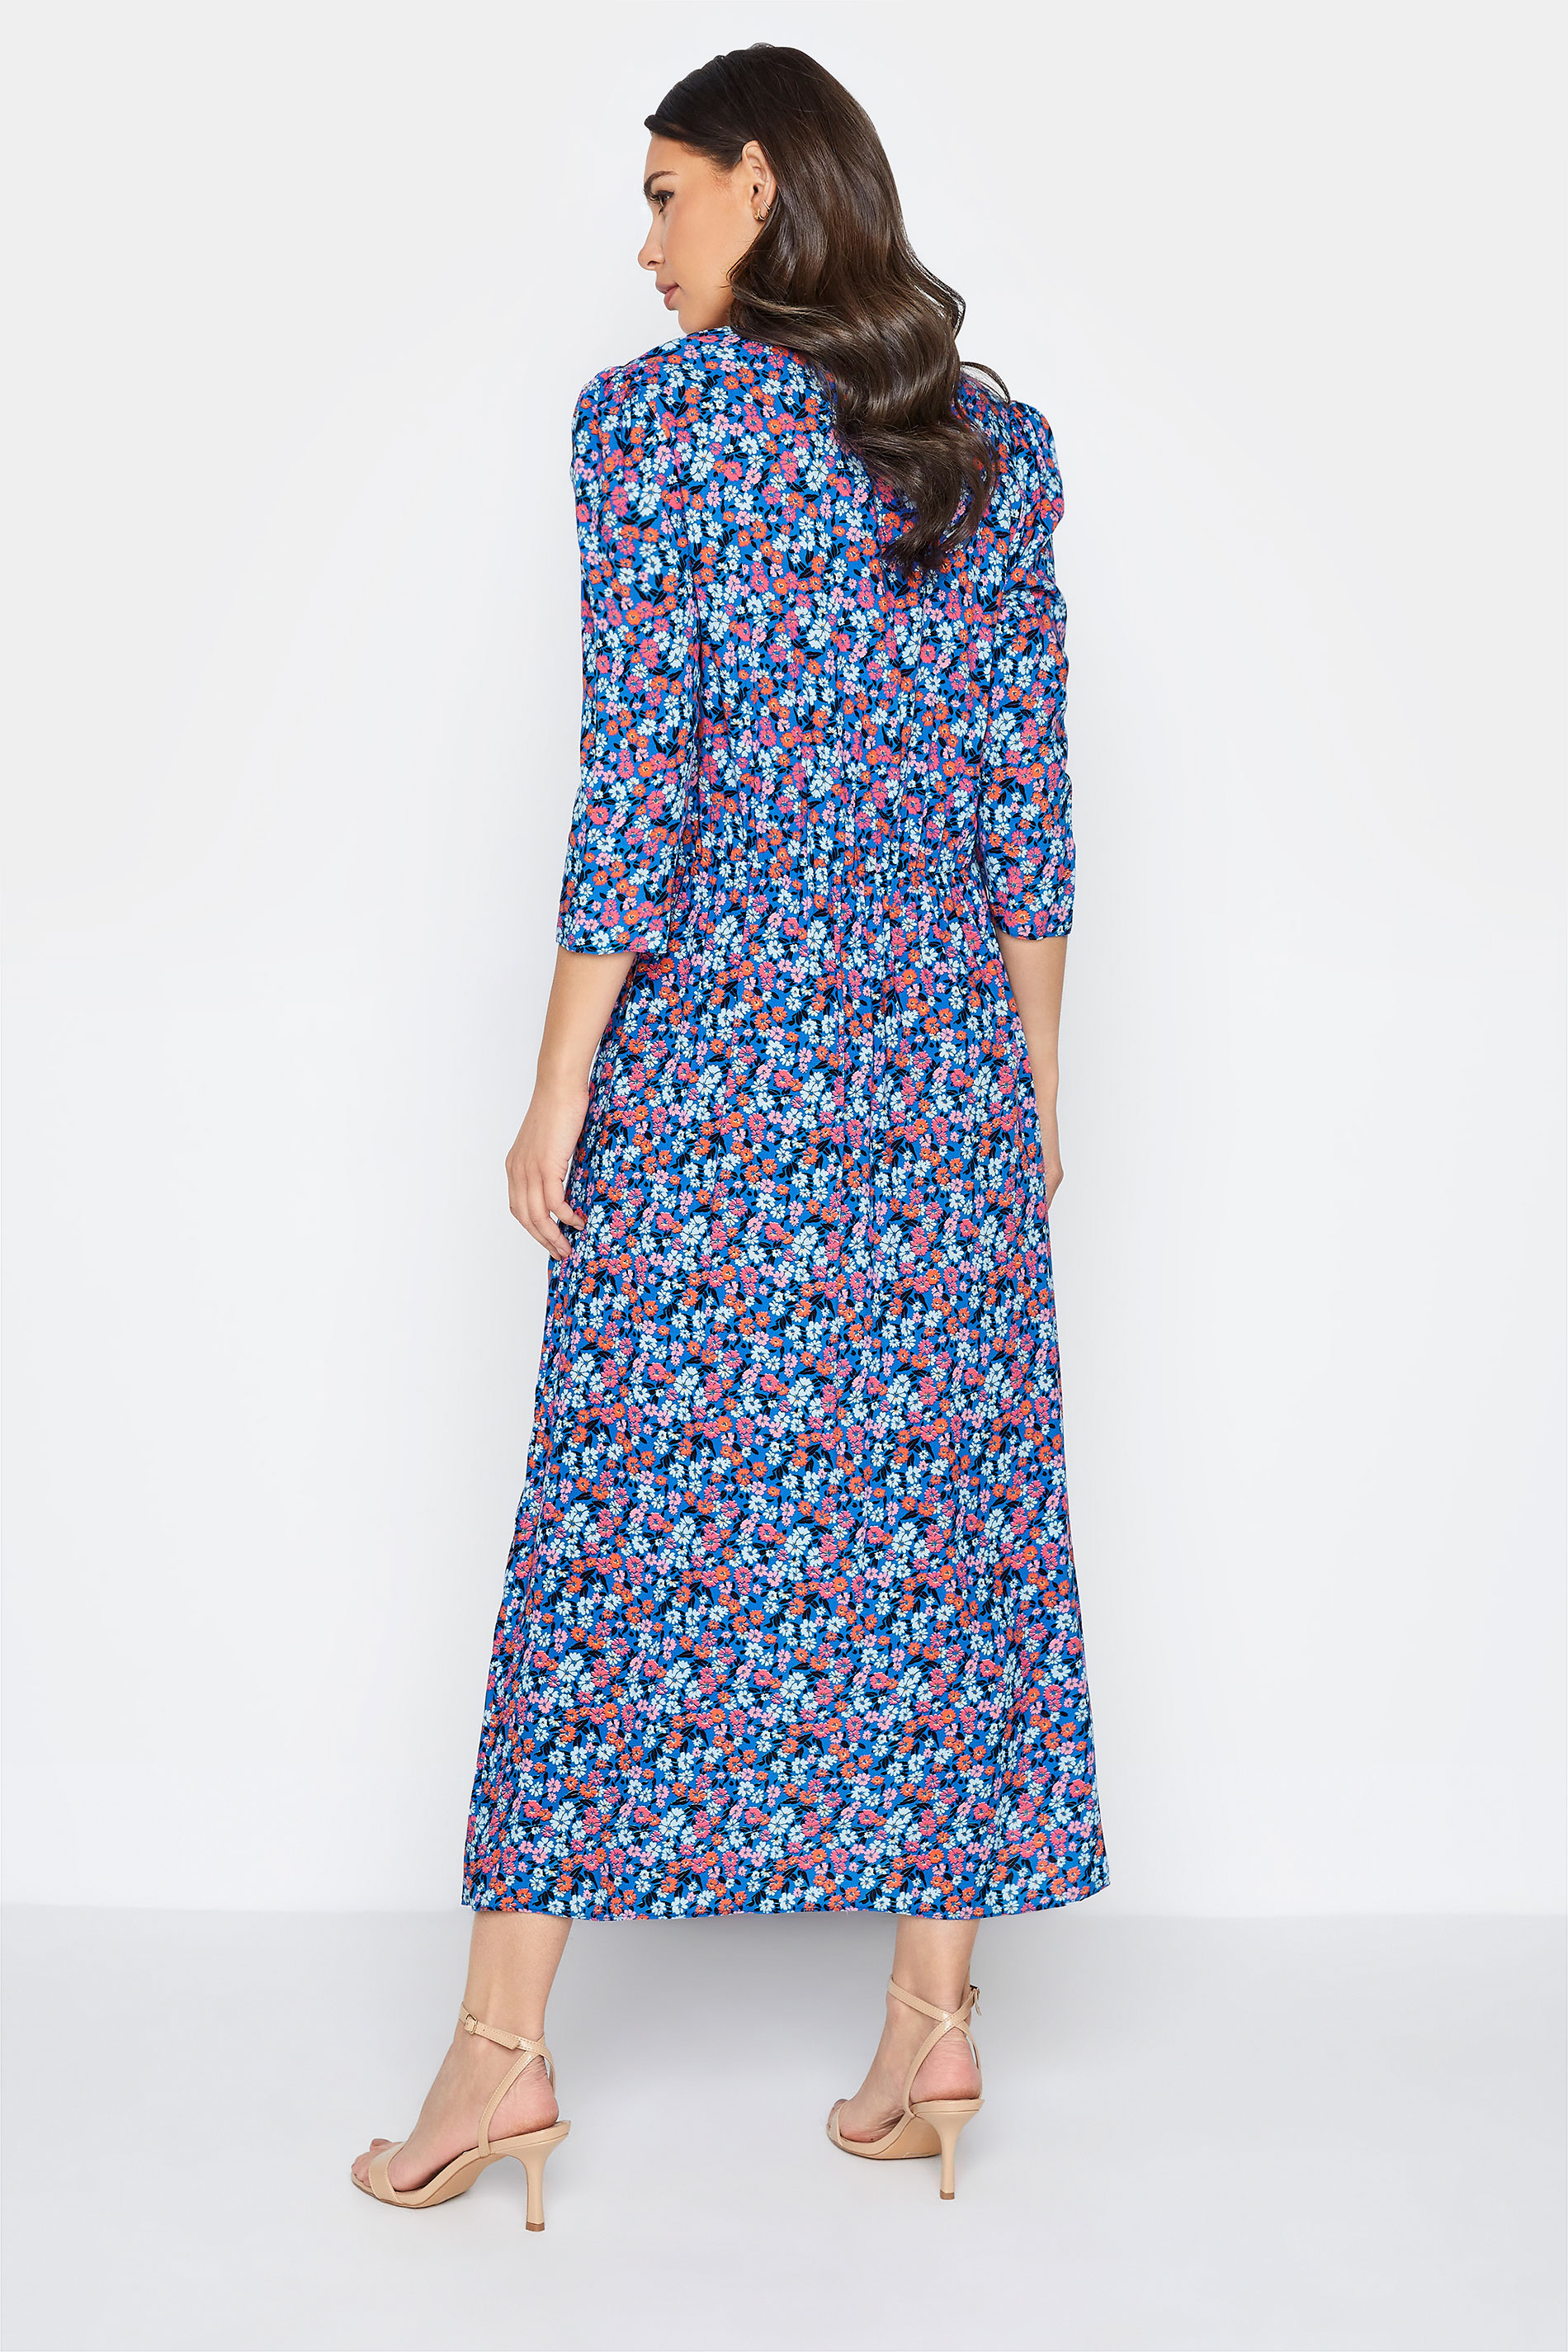 Tall Women's LTS Blue Floral Print Midaxi Tea Dress | Long Tall Sally 3